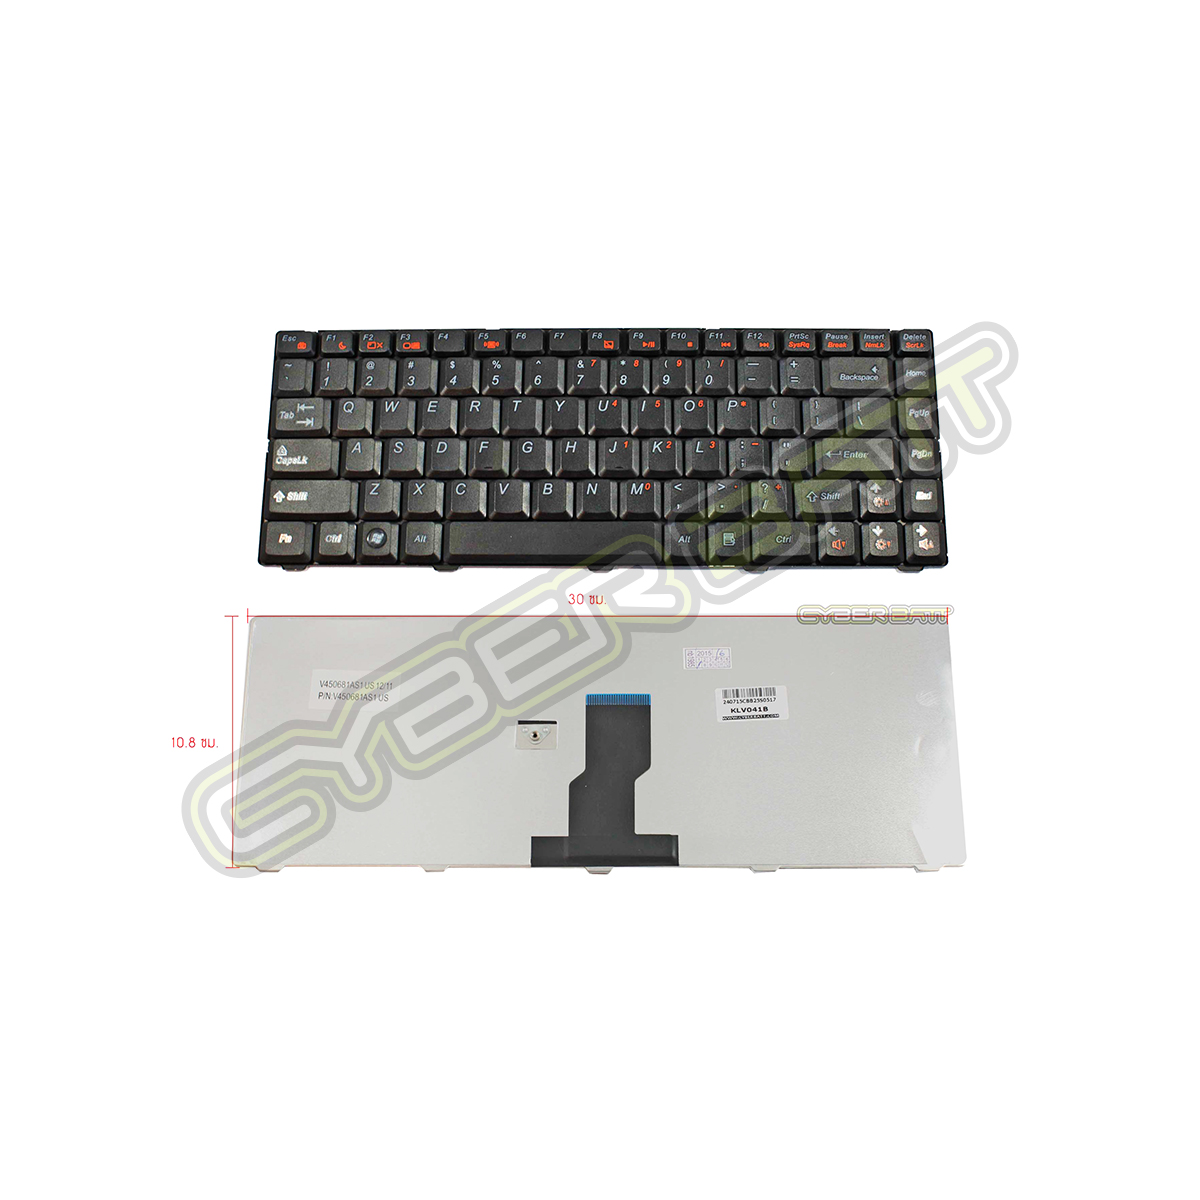 Keyboard Lenovo B450 Black US 